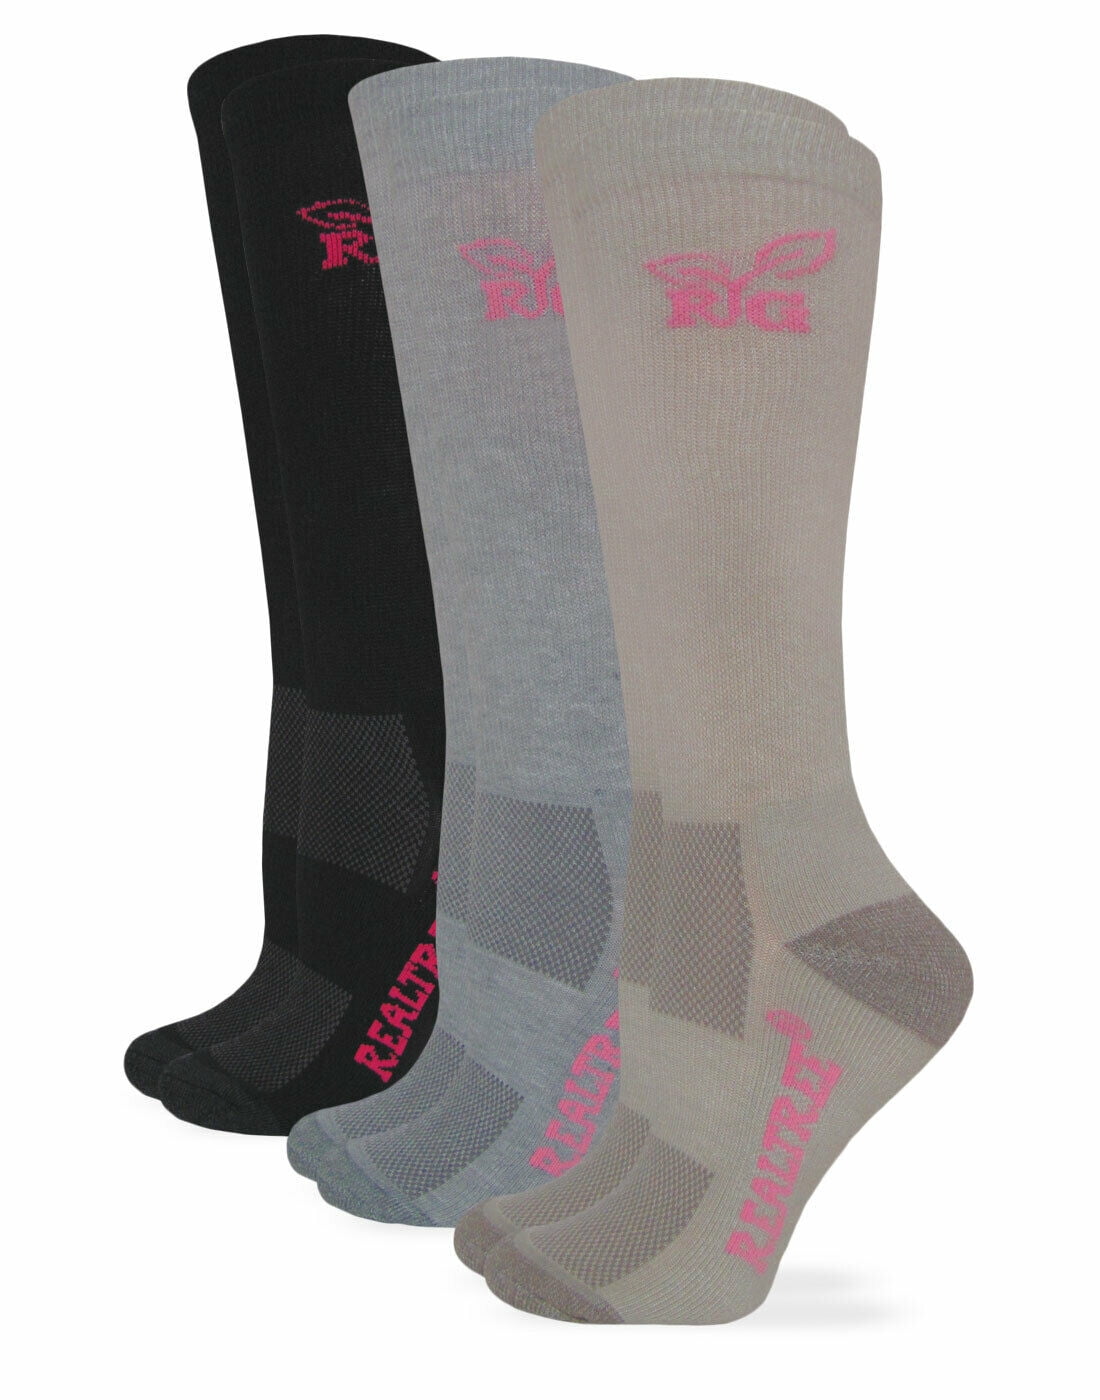 Realtree Women's Mid Calf Socks Gift Box 3-Pair Pack